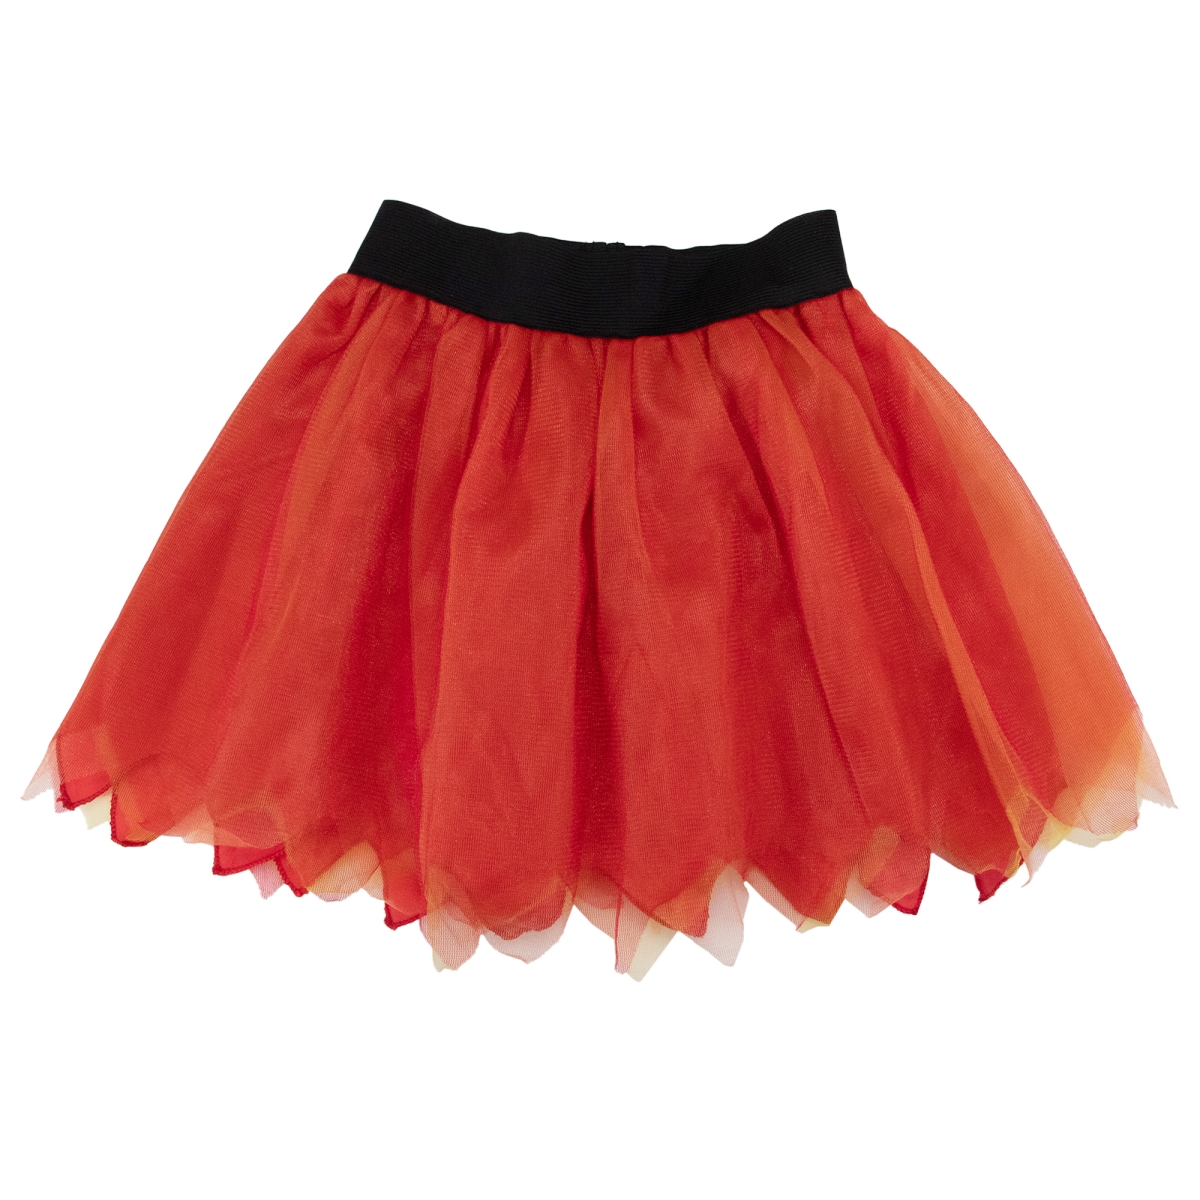 Picture of Northlight 34107337 17 in. Girls Skirt Halloween Costume Accessory&#44; Orange & Black